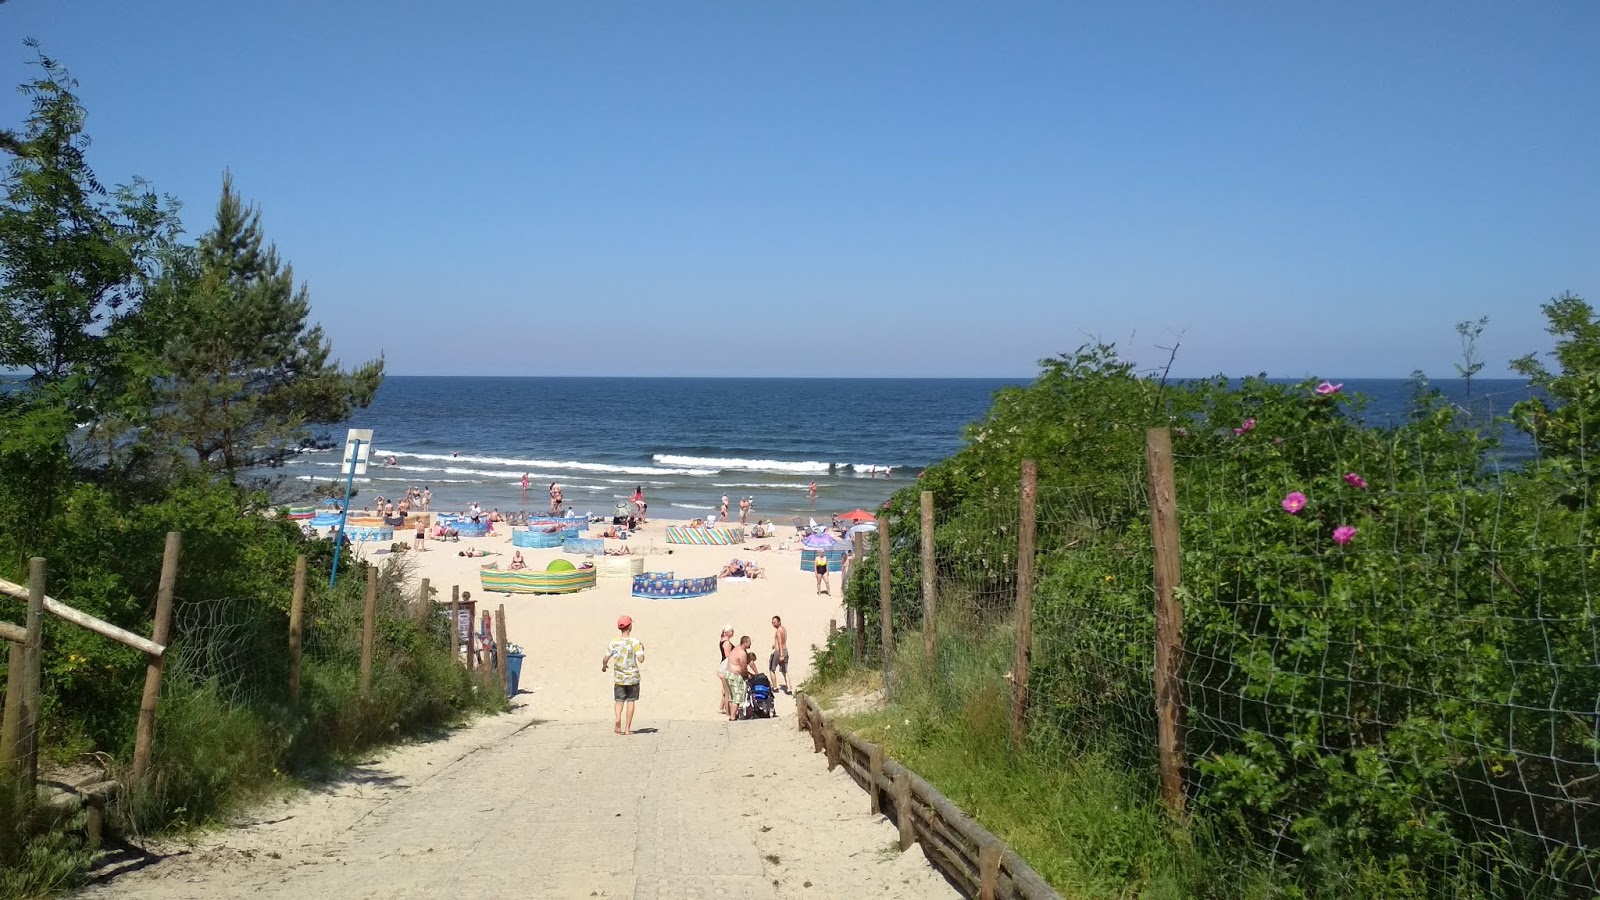 Foto de Stegna Morska beach - lugar popular entre os apreciadores de relaxamento